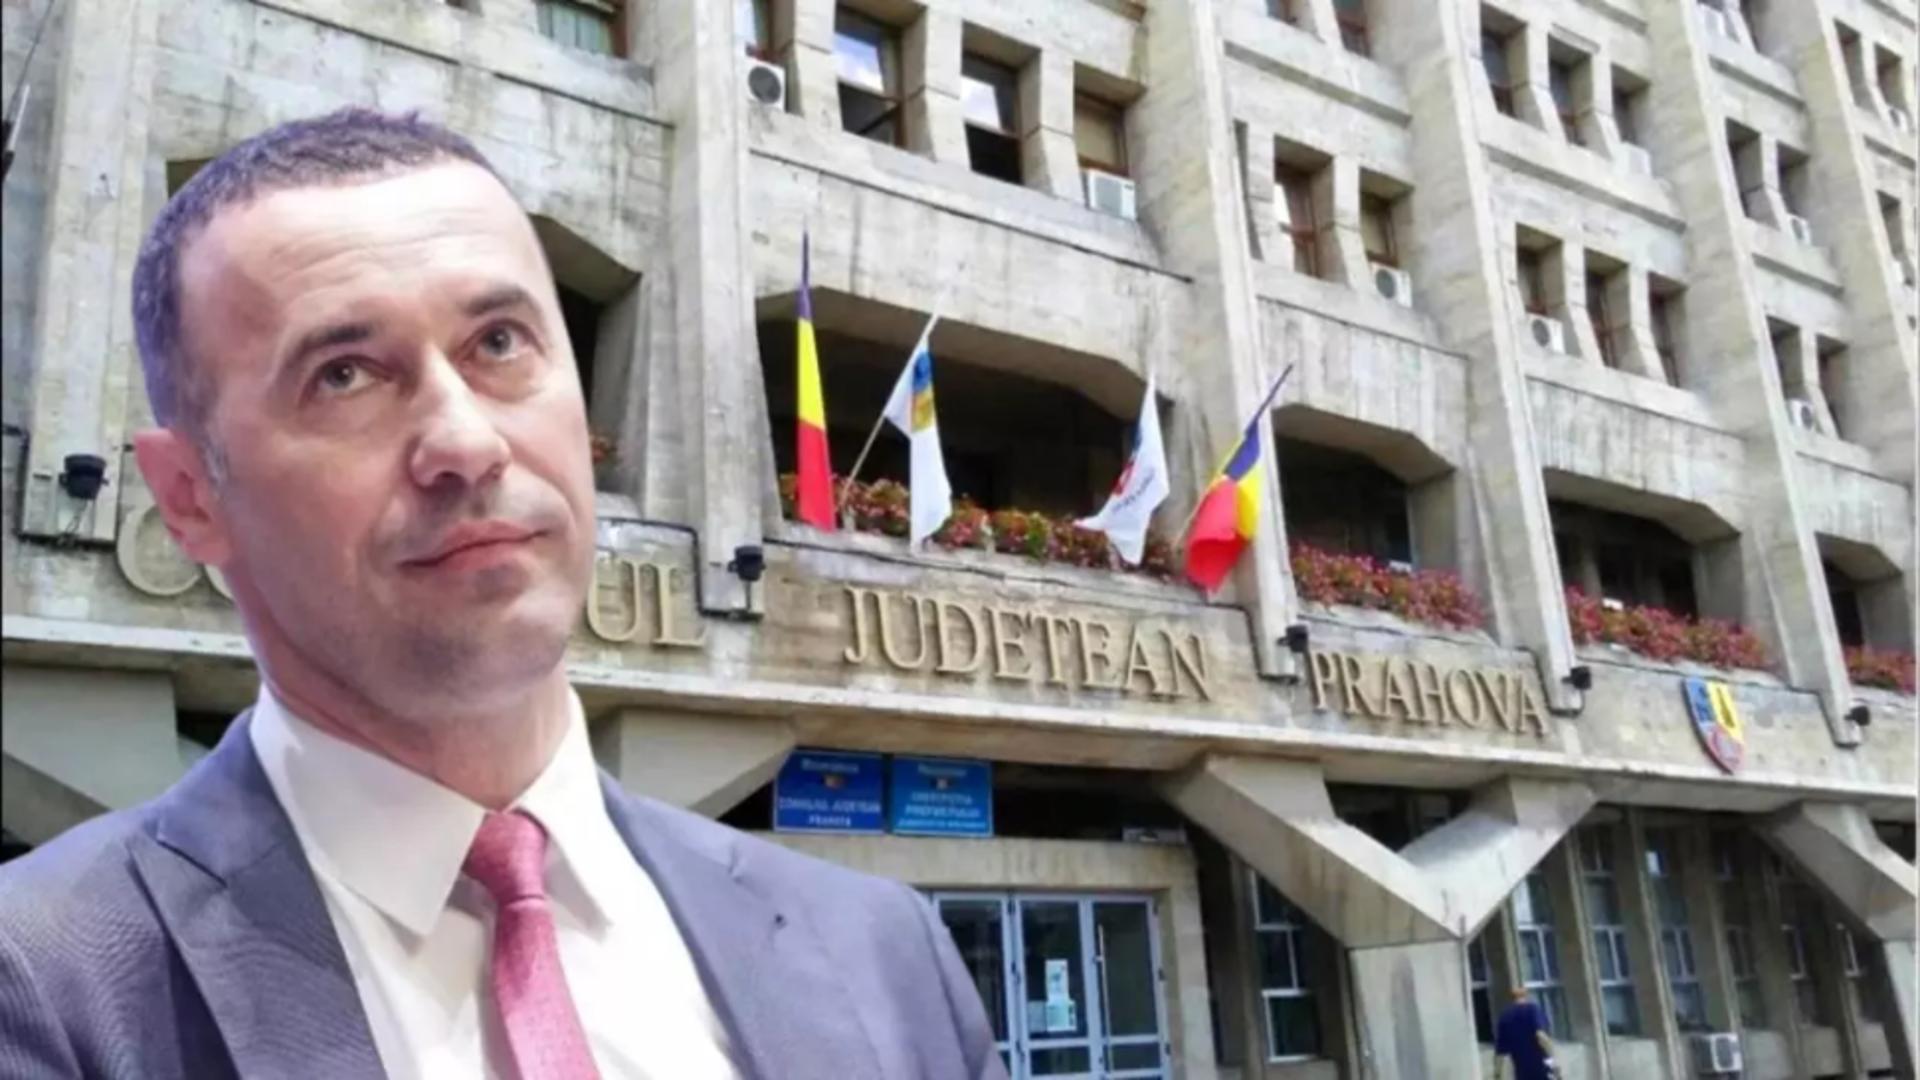 Candidatura lui Iulian Dumitrescu la șefia CJ Prahova a pus pe jar liberalii